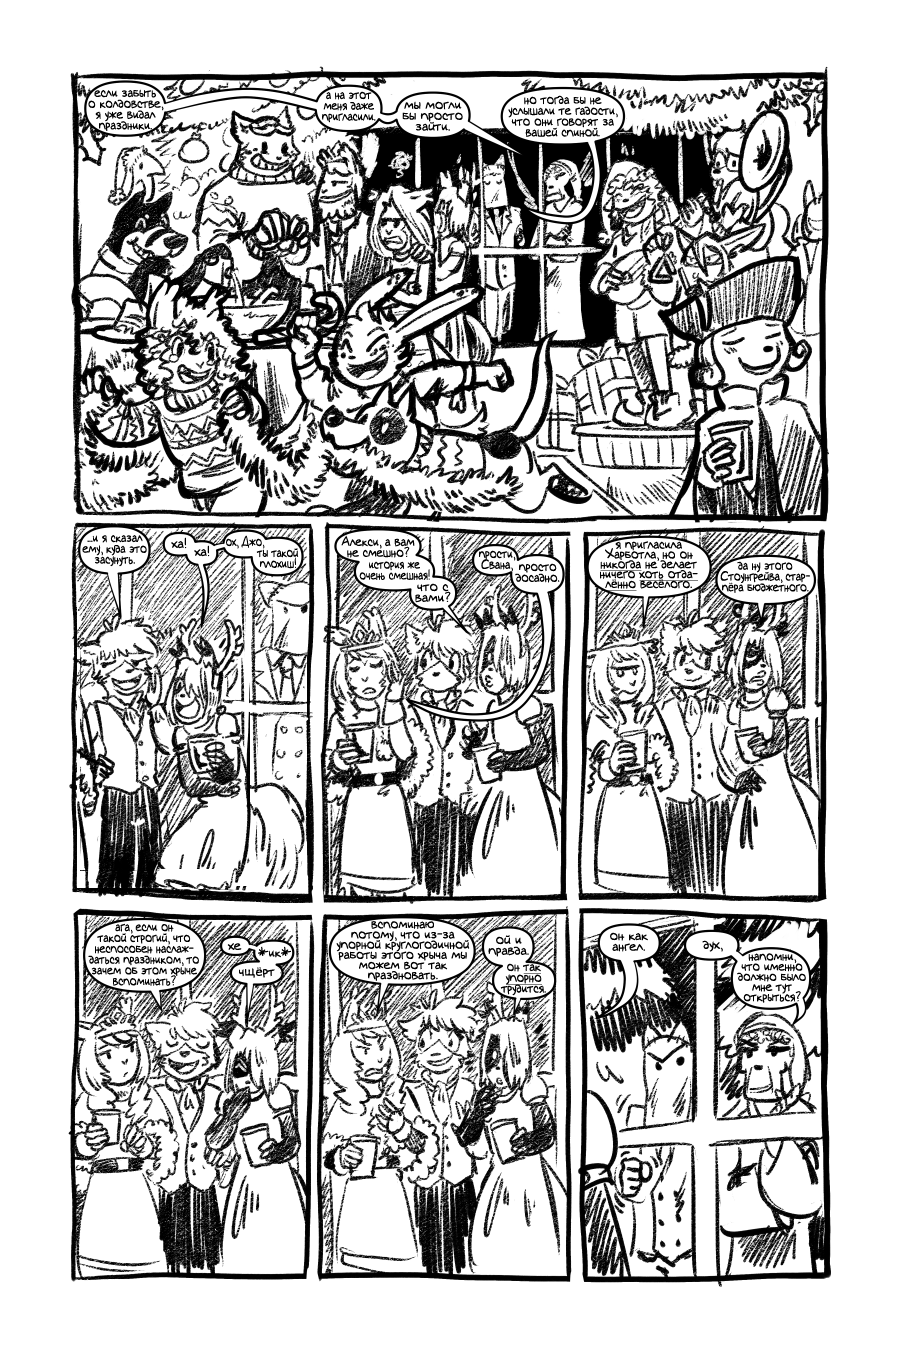 Комикс Беспризорное Царство [Latchkey Kingdom]: выпуск №539